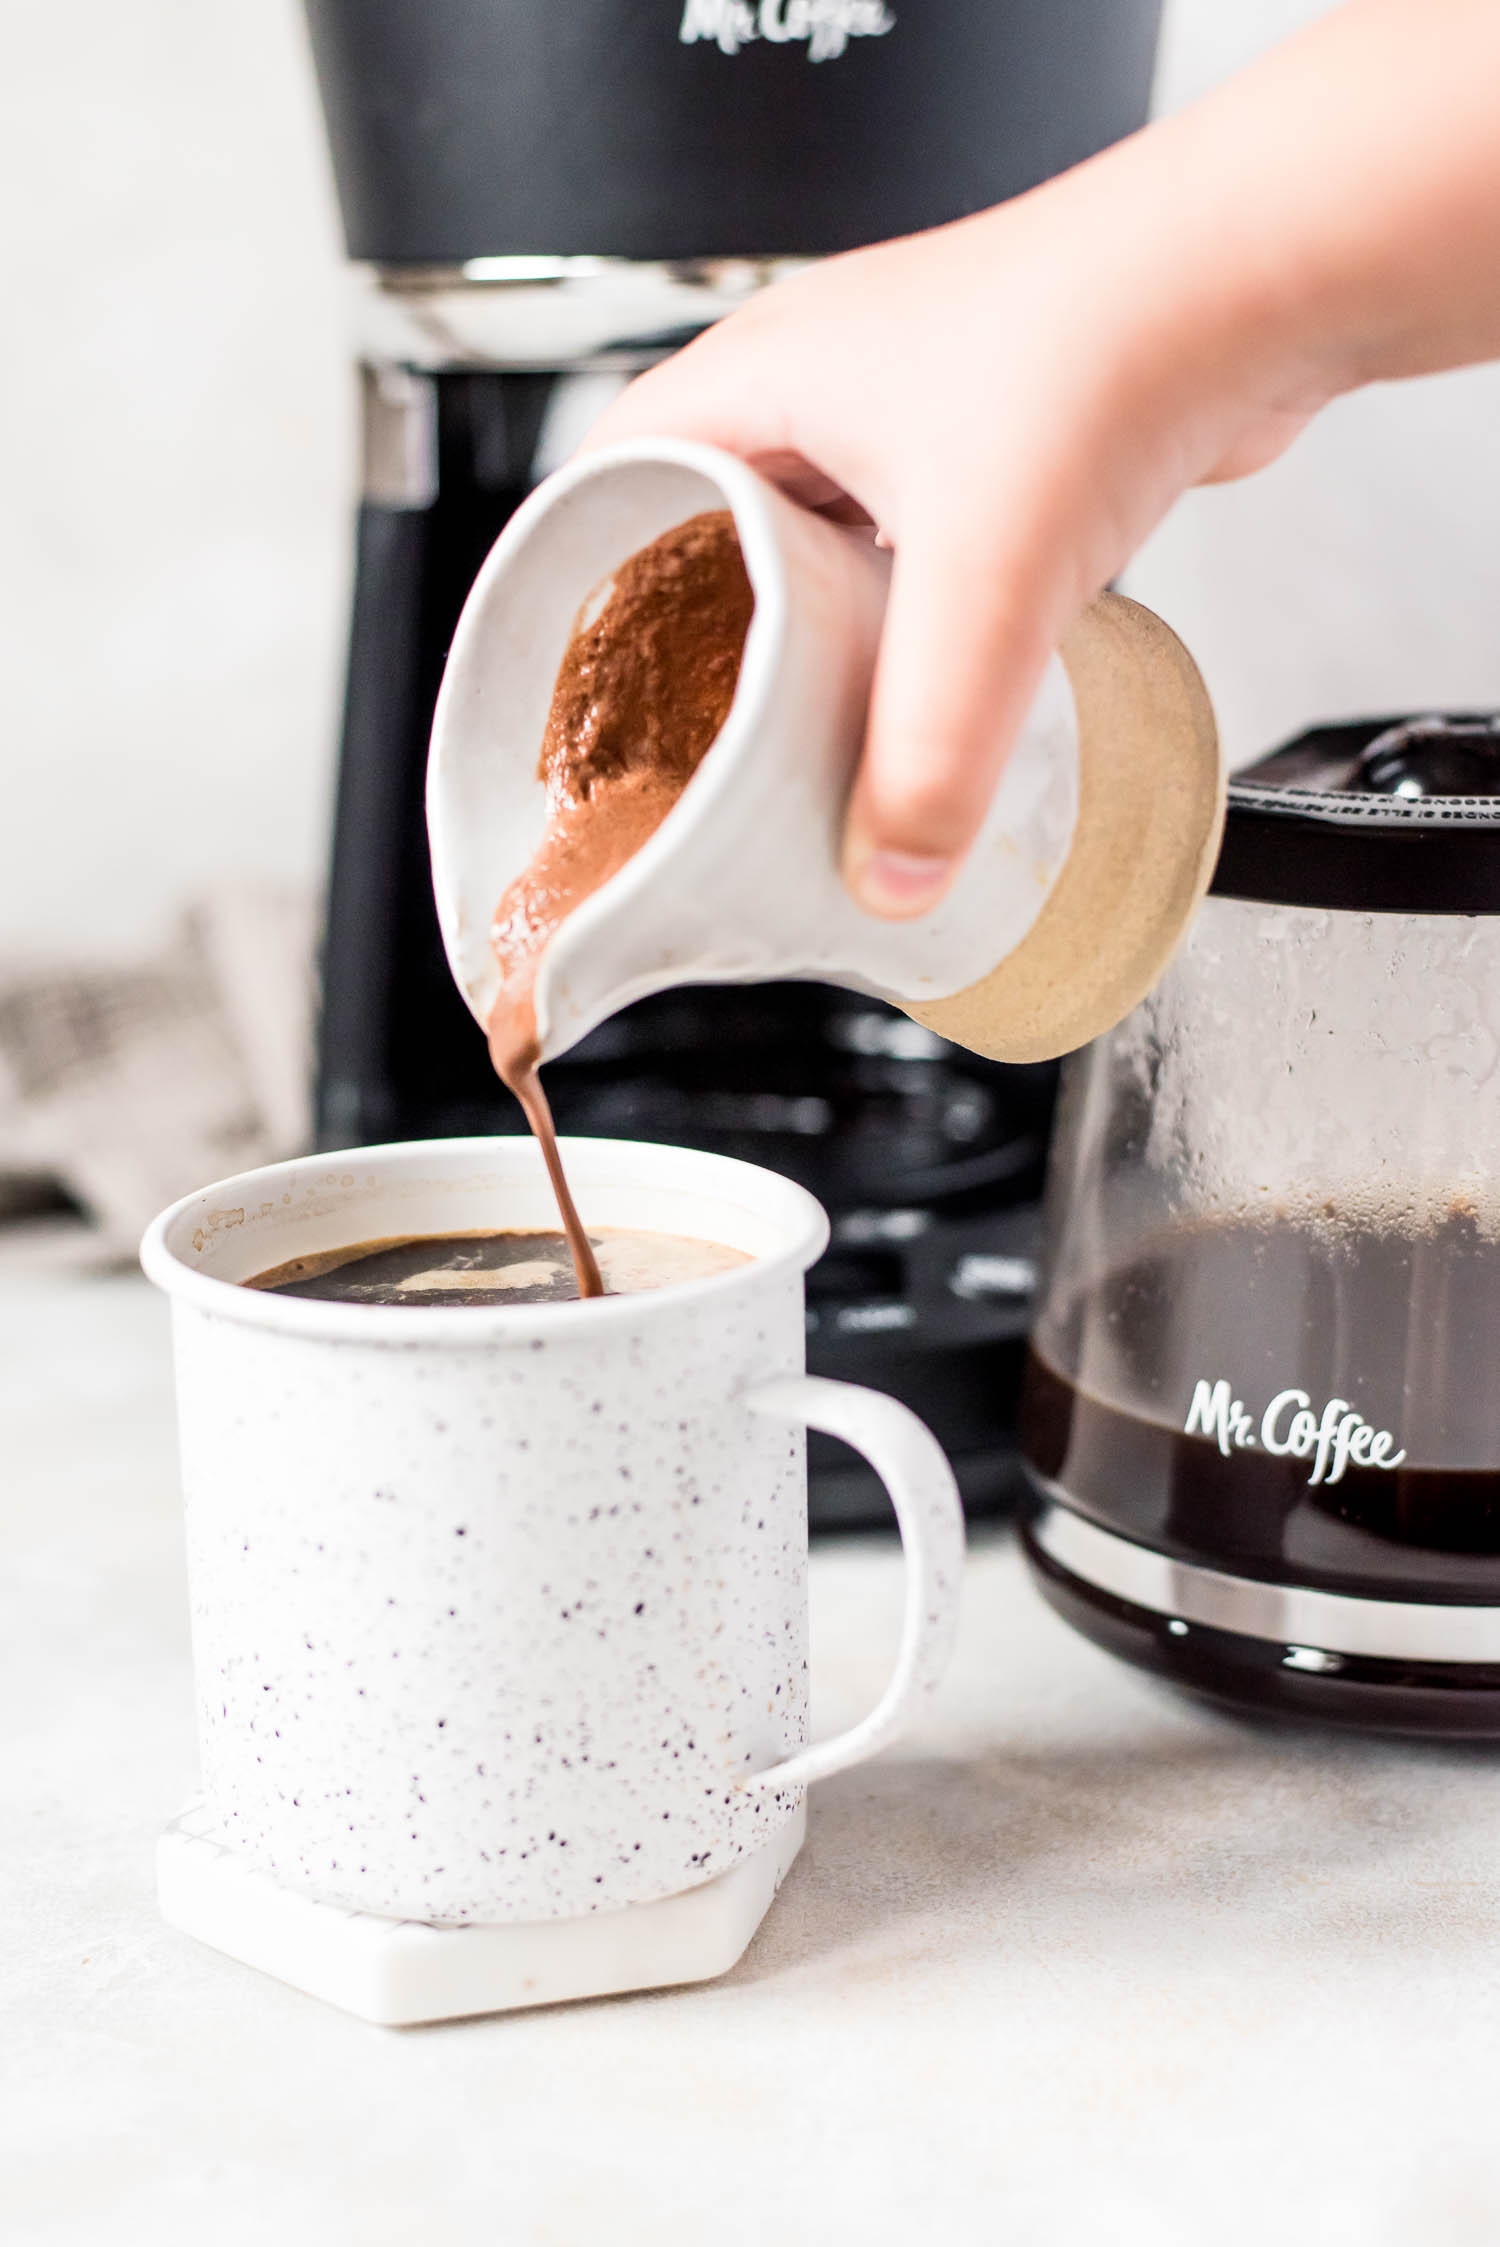 mocha coffee creamer poured into coffee mug